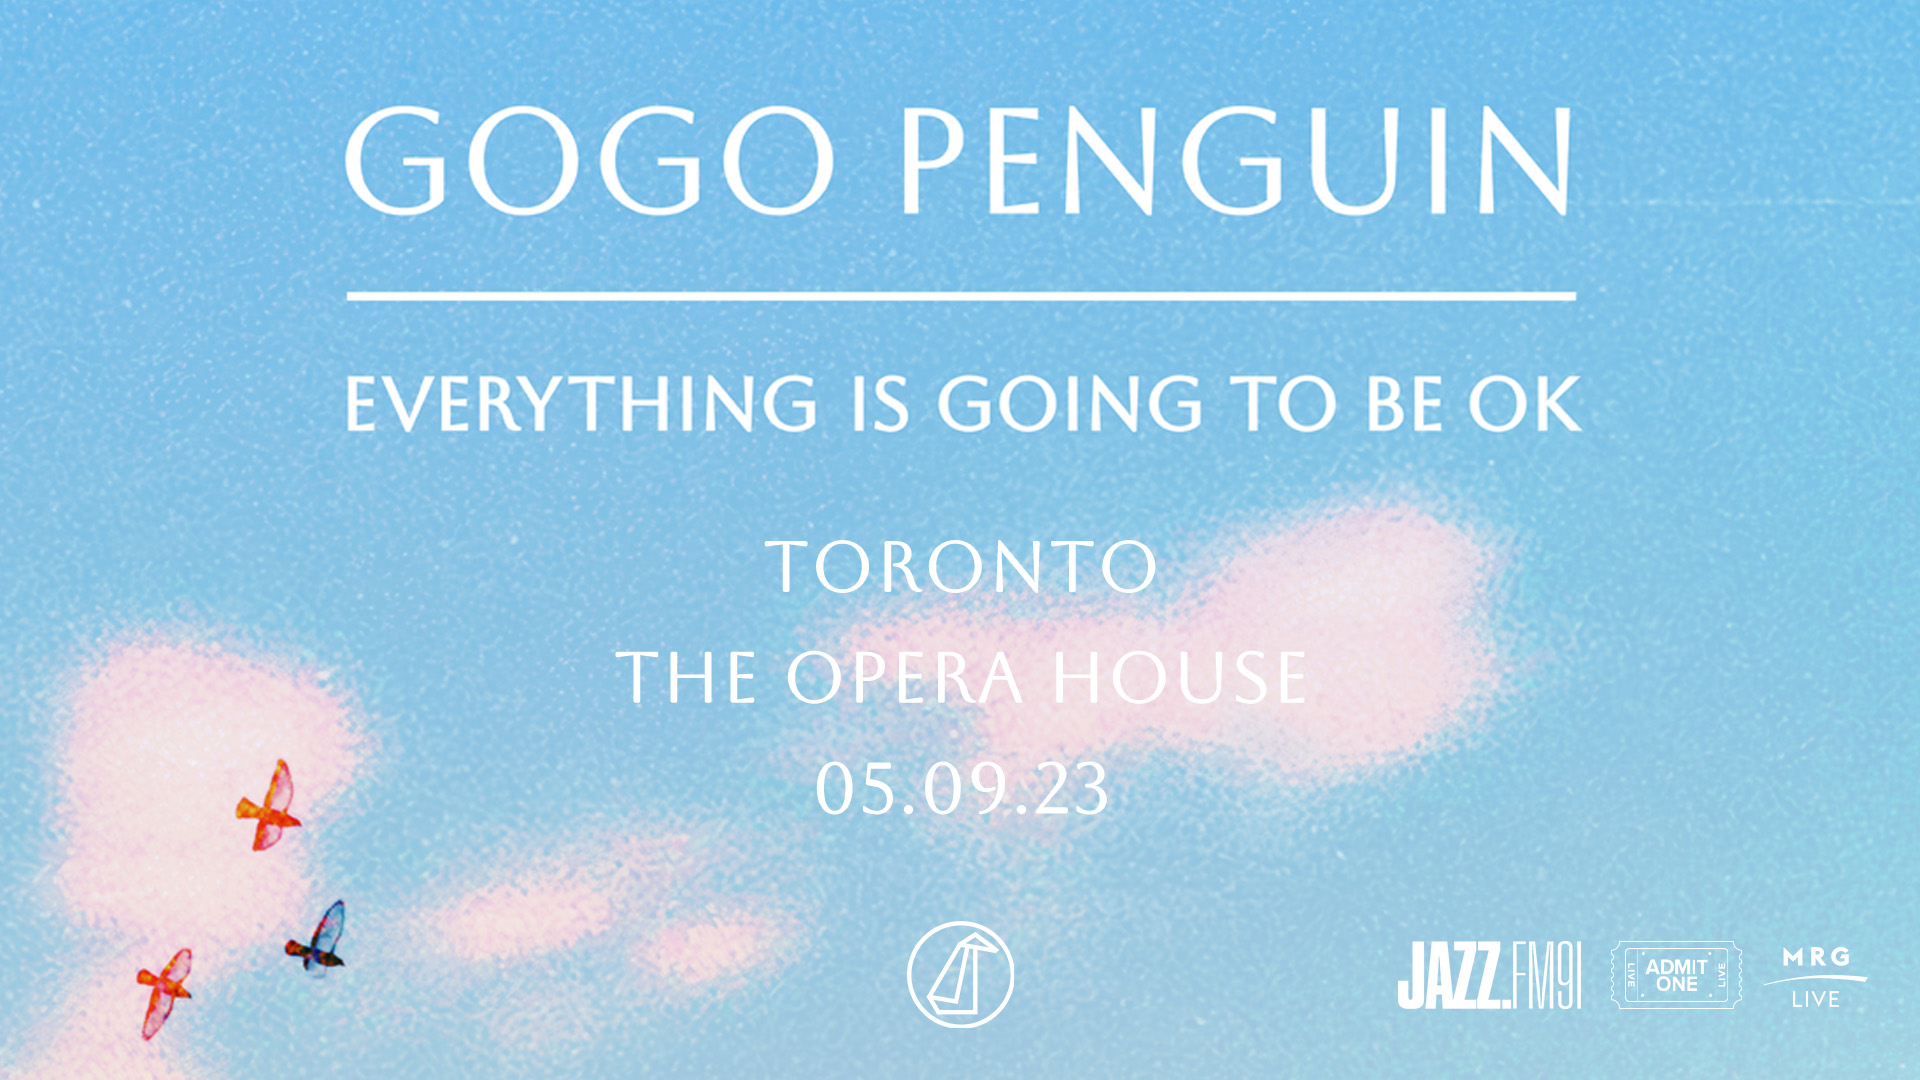 JAZZ.FM91 and MRG Live present: GoGo Penguin at The Opera House